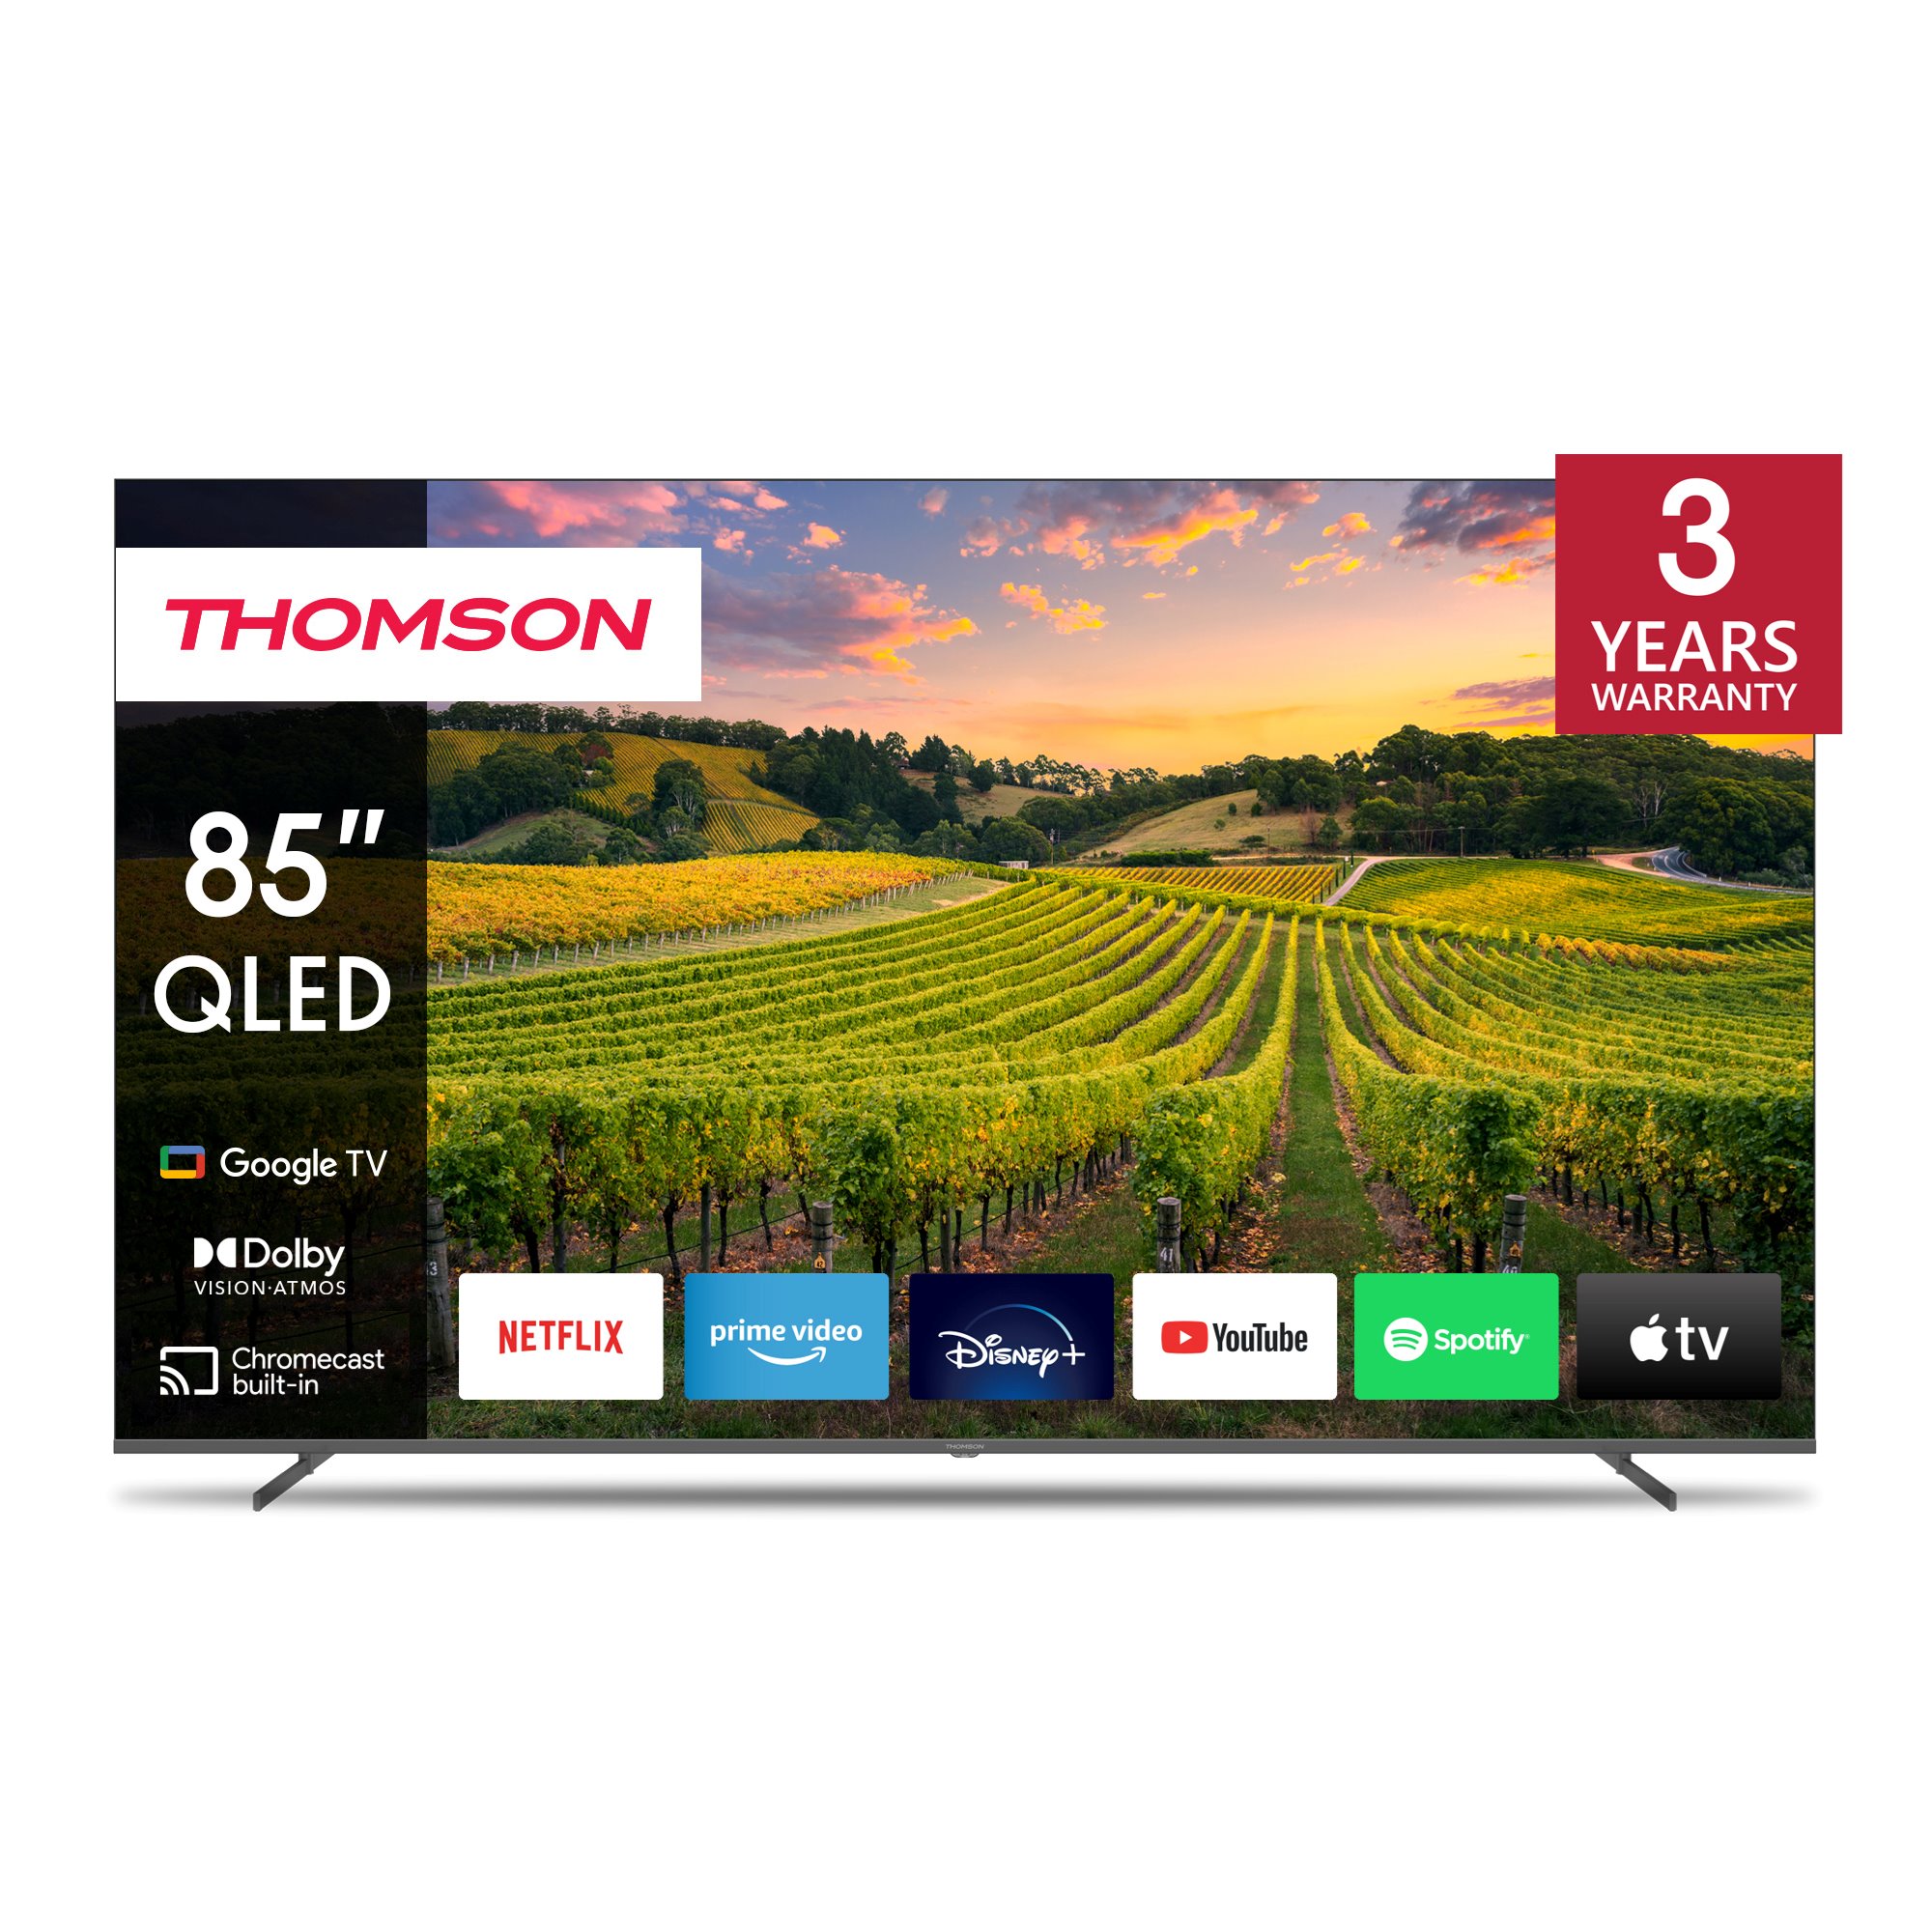 Thomson 85QG5S14 QLED Google TV